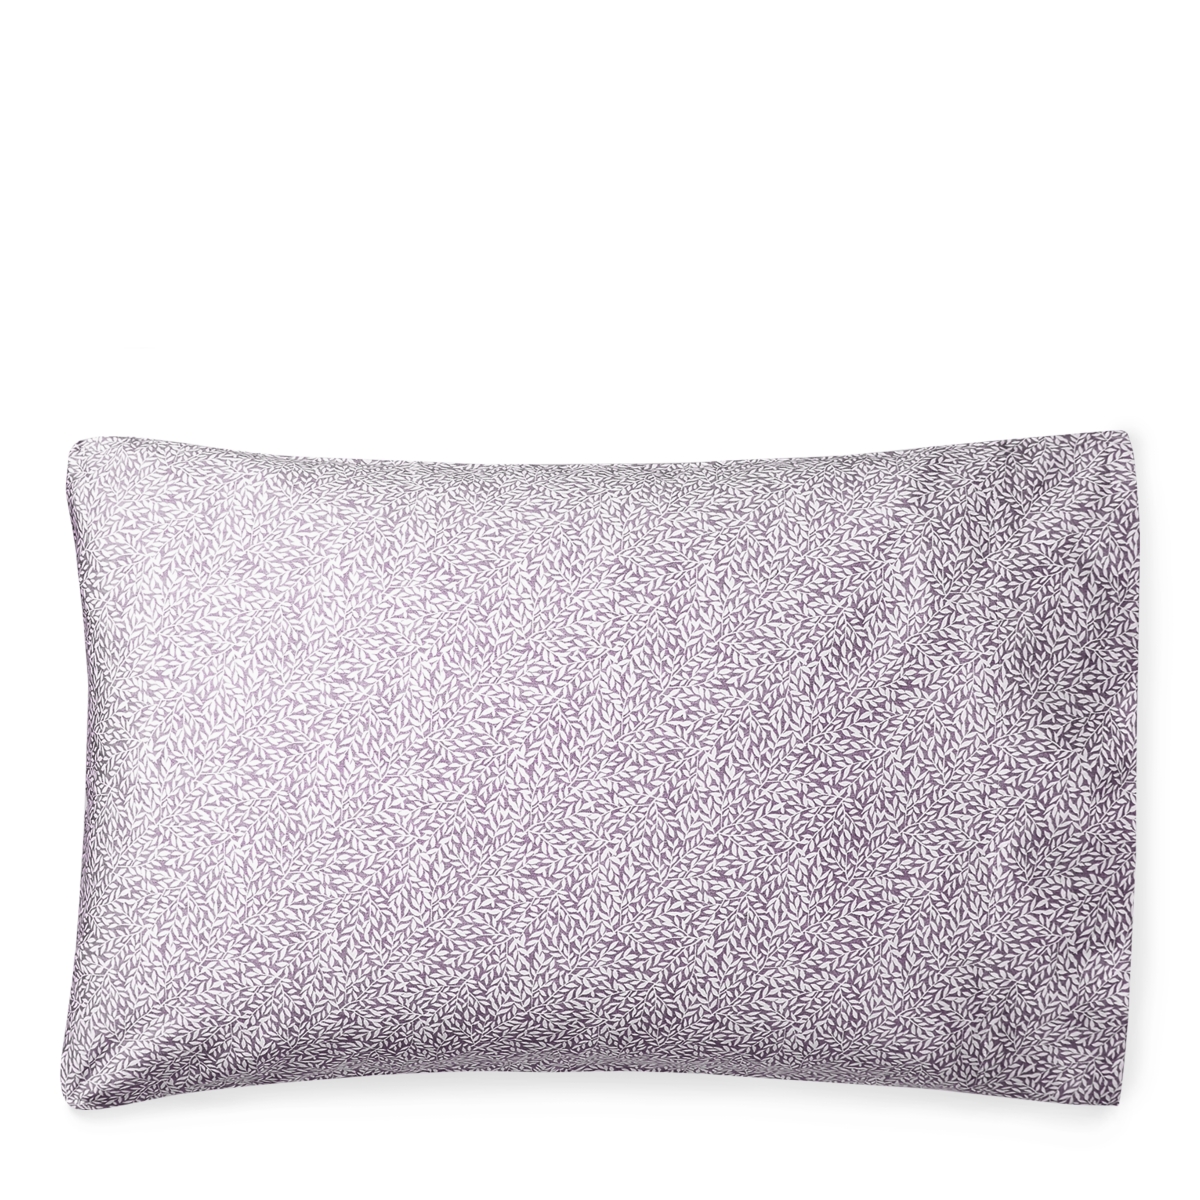 Lauren Ralph Lauren Spencer Leaf Pillowcase Pair, King Bedding In Deep Lavender Leaf